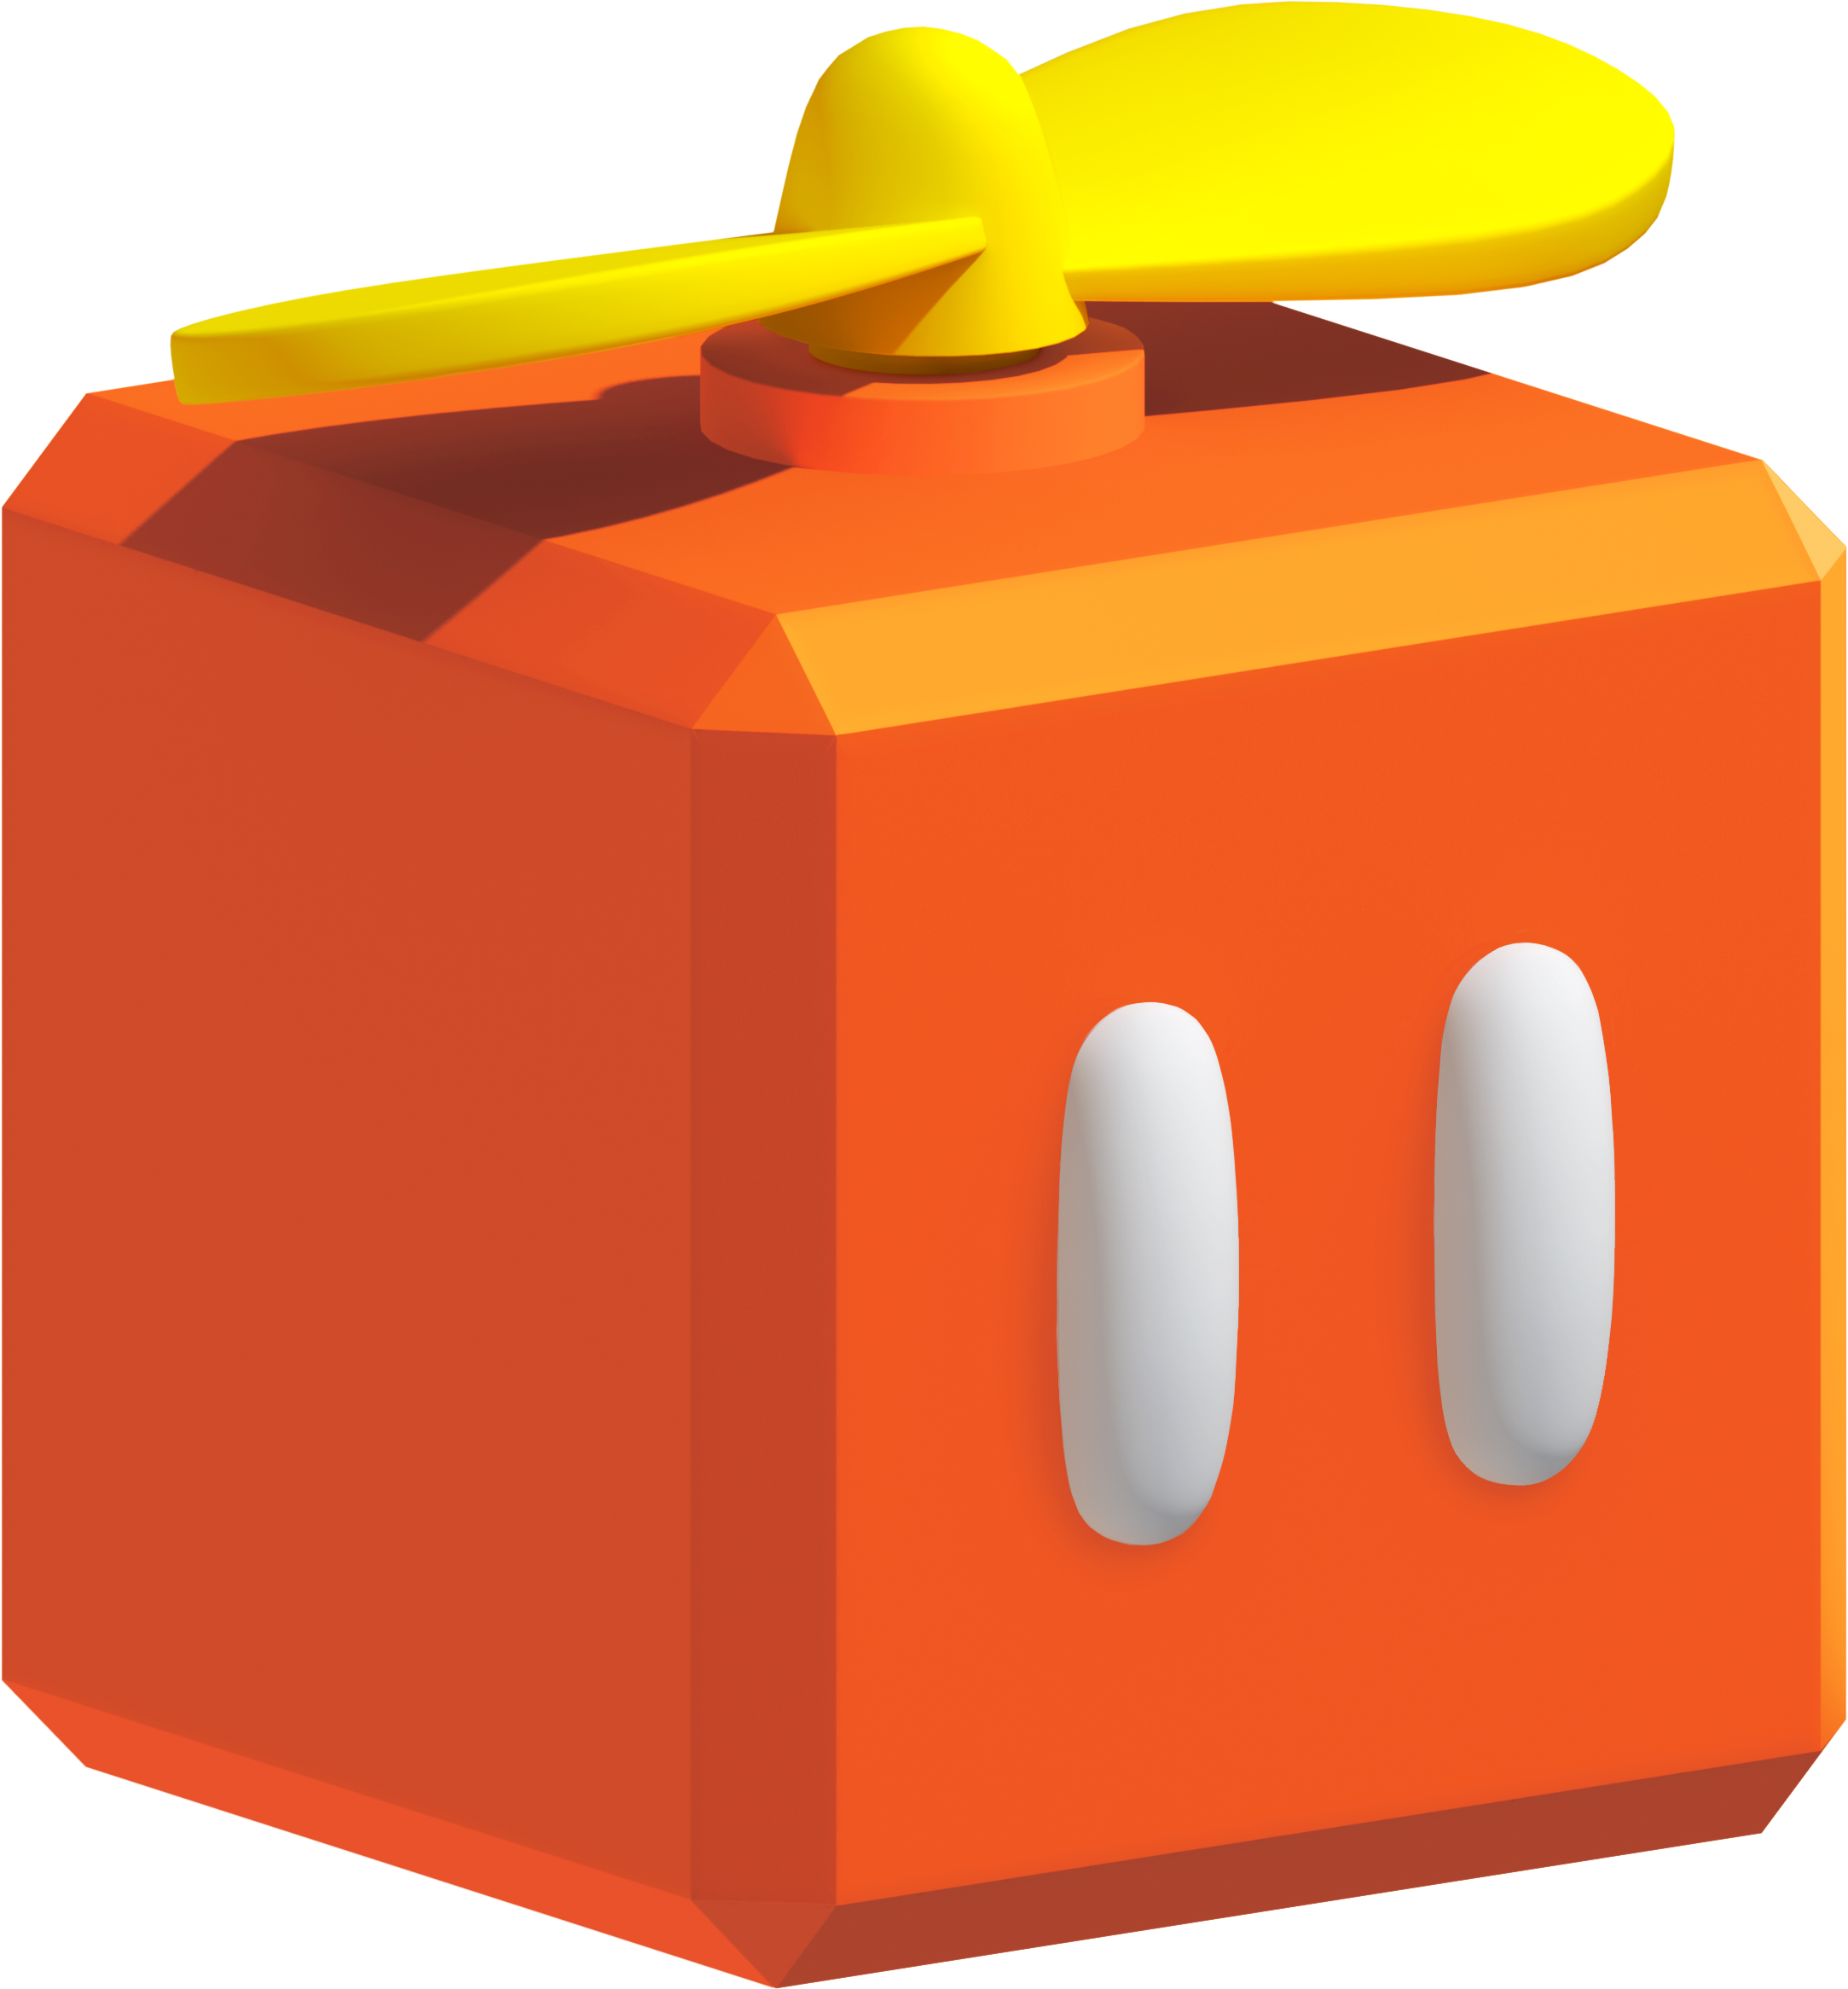 Raccoon Mario The Propeller Block Blog By Iceflower4me - New Super Mario Bros Wii Propeller Block (2167x2332), Png Download